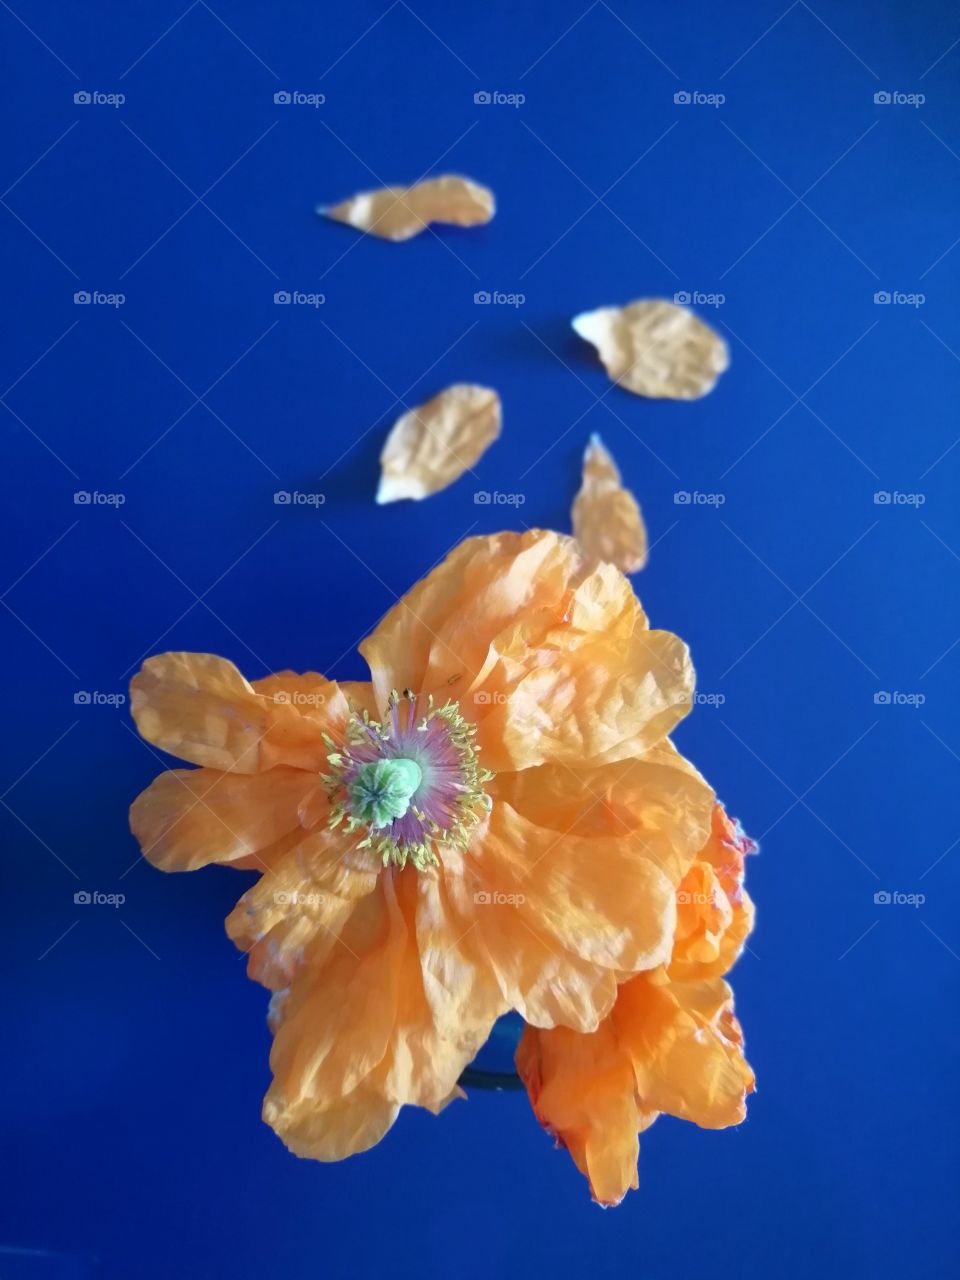 Orange flower, orange and blue